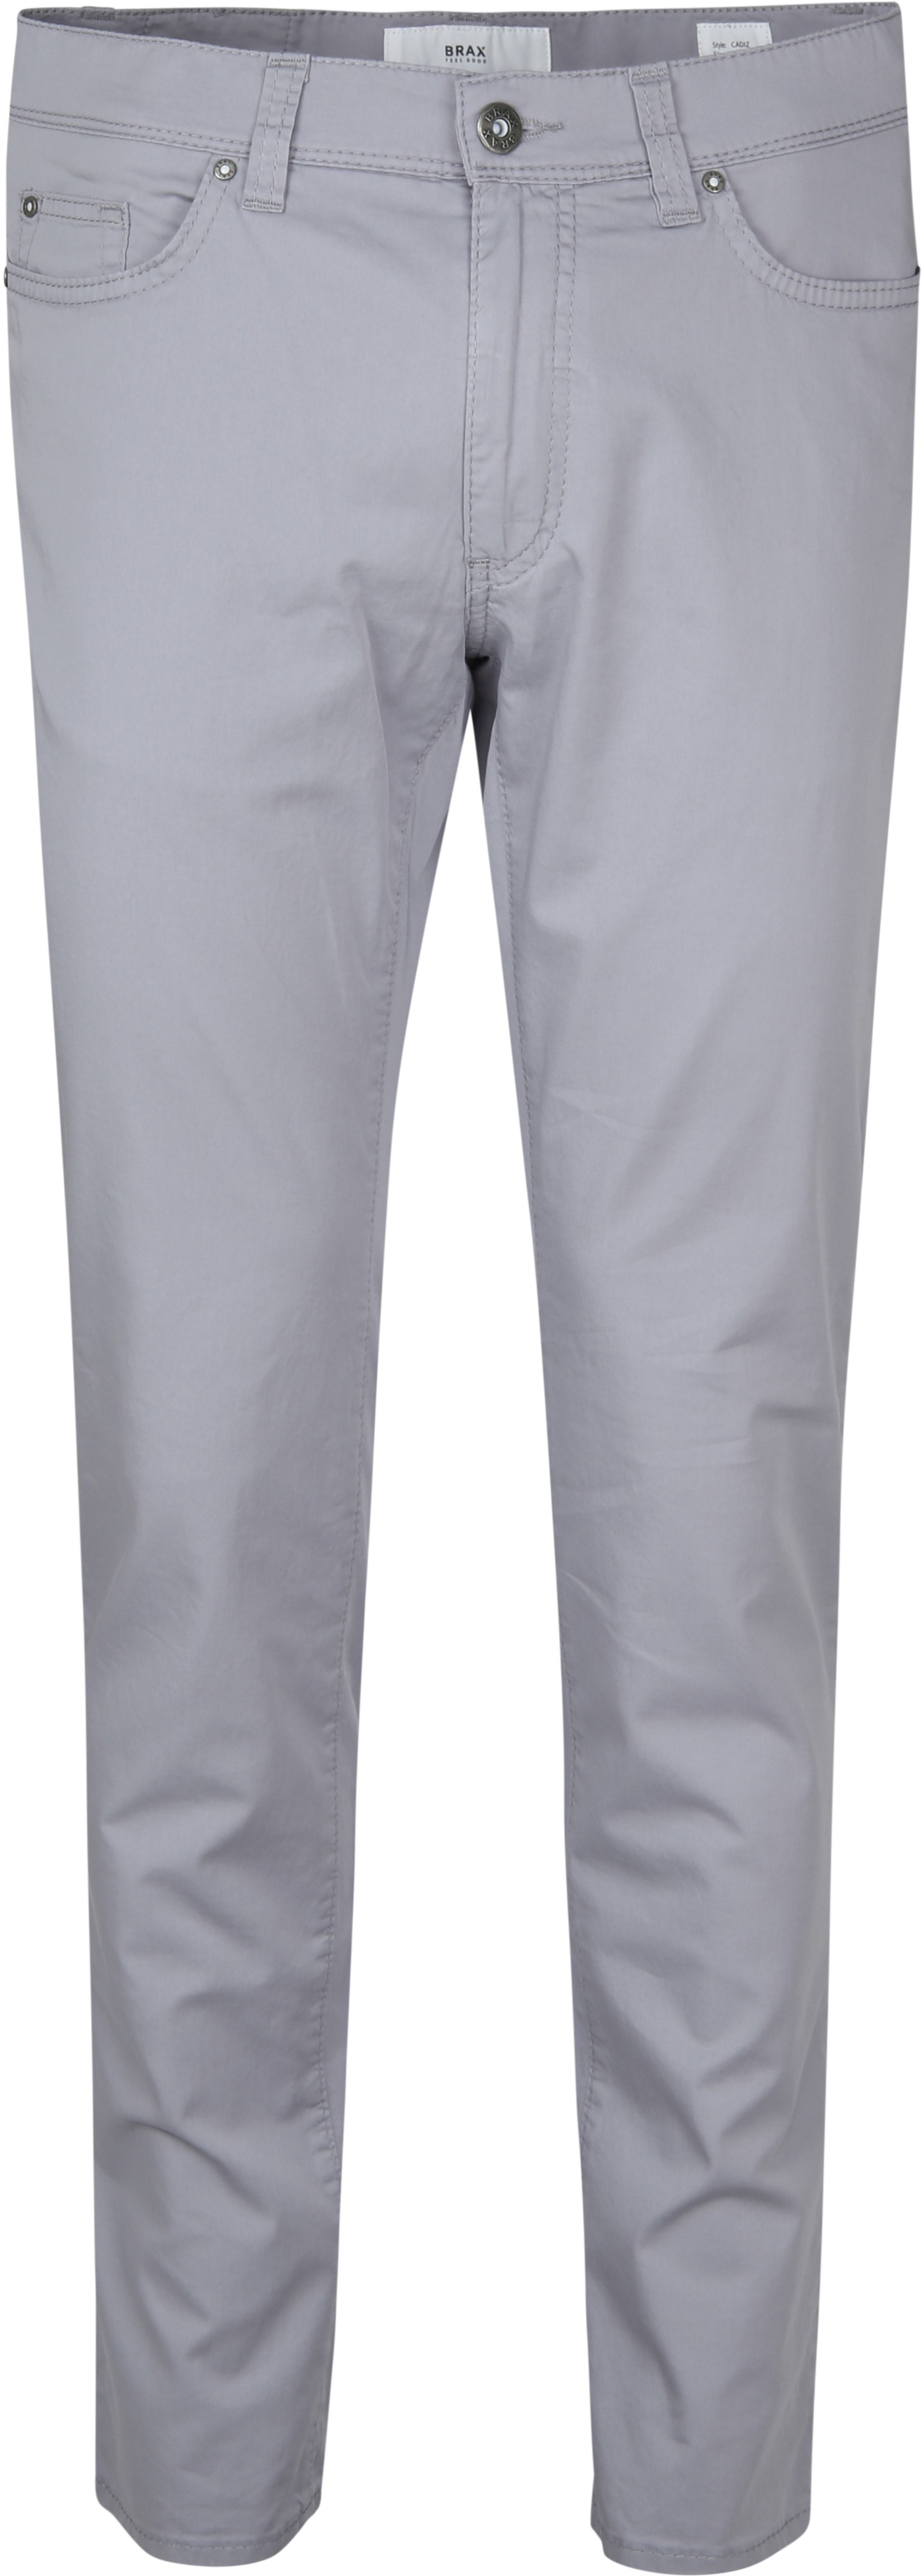 Brax Cadiz Pants Five Pocket Grey size W 32